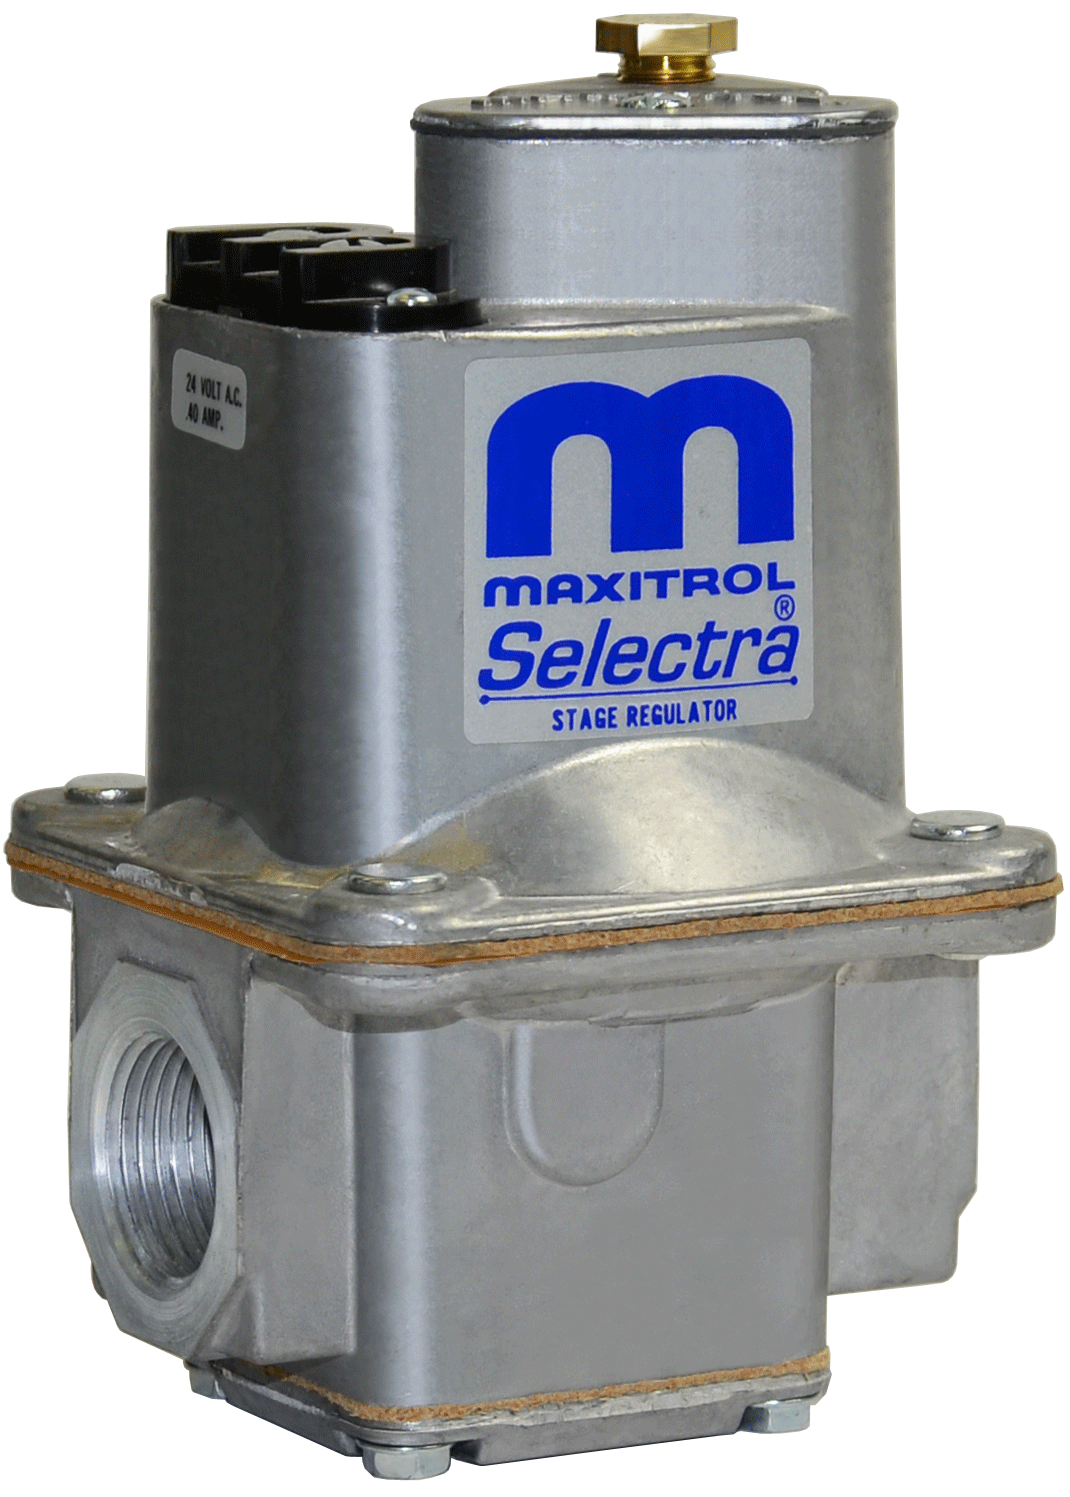 Maxitrol SR600-3/4" Gas Regulator 2-Stage 3/4" NPT